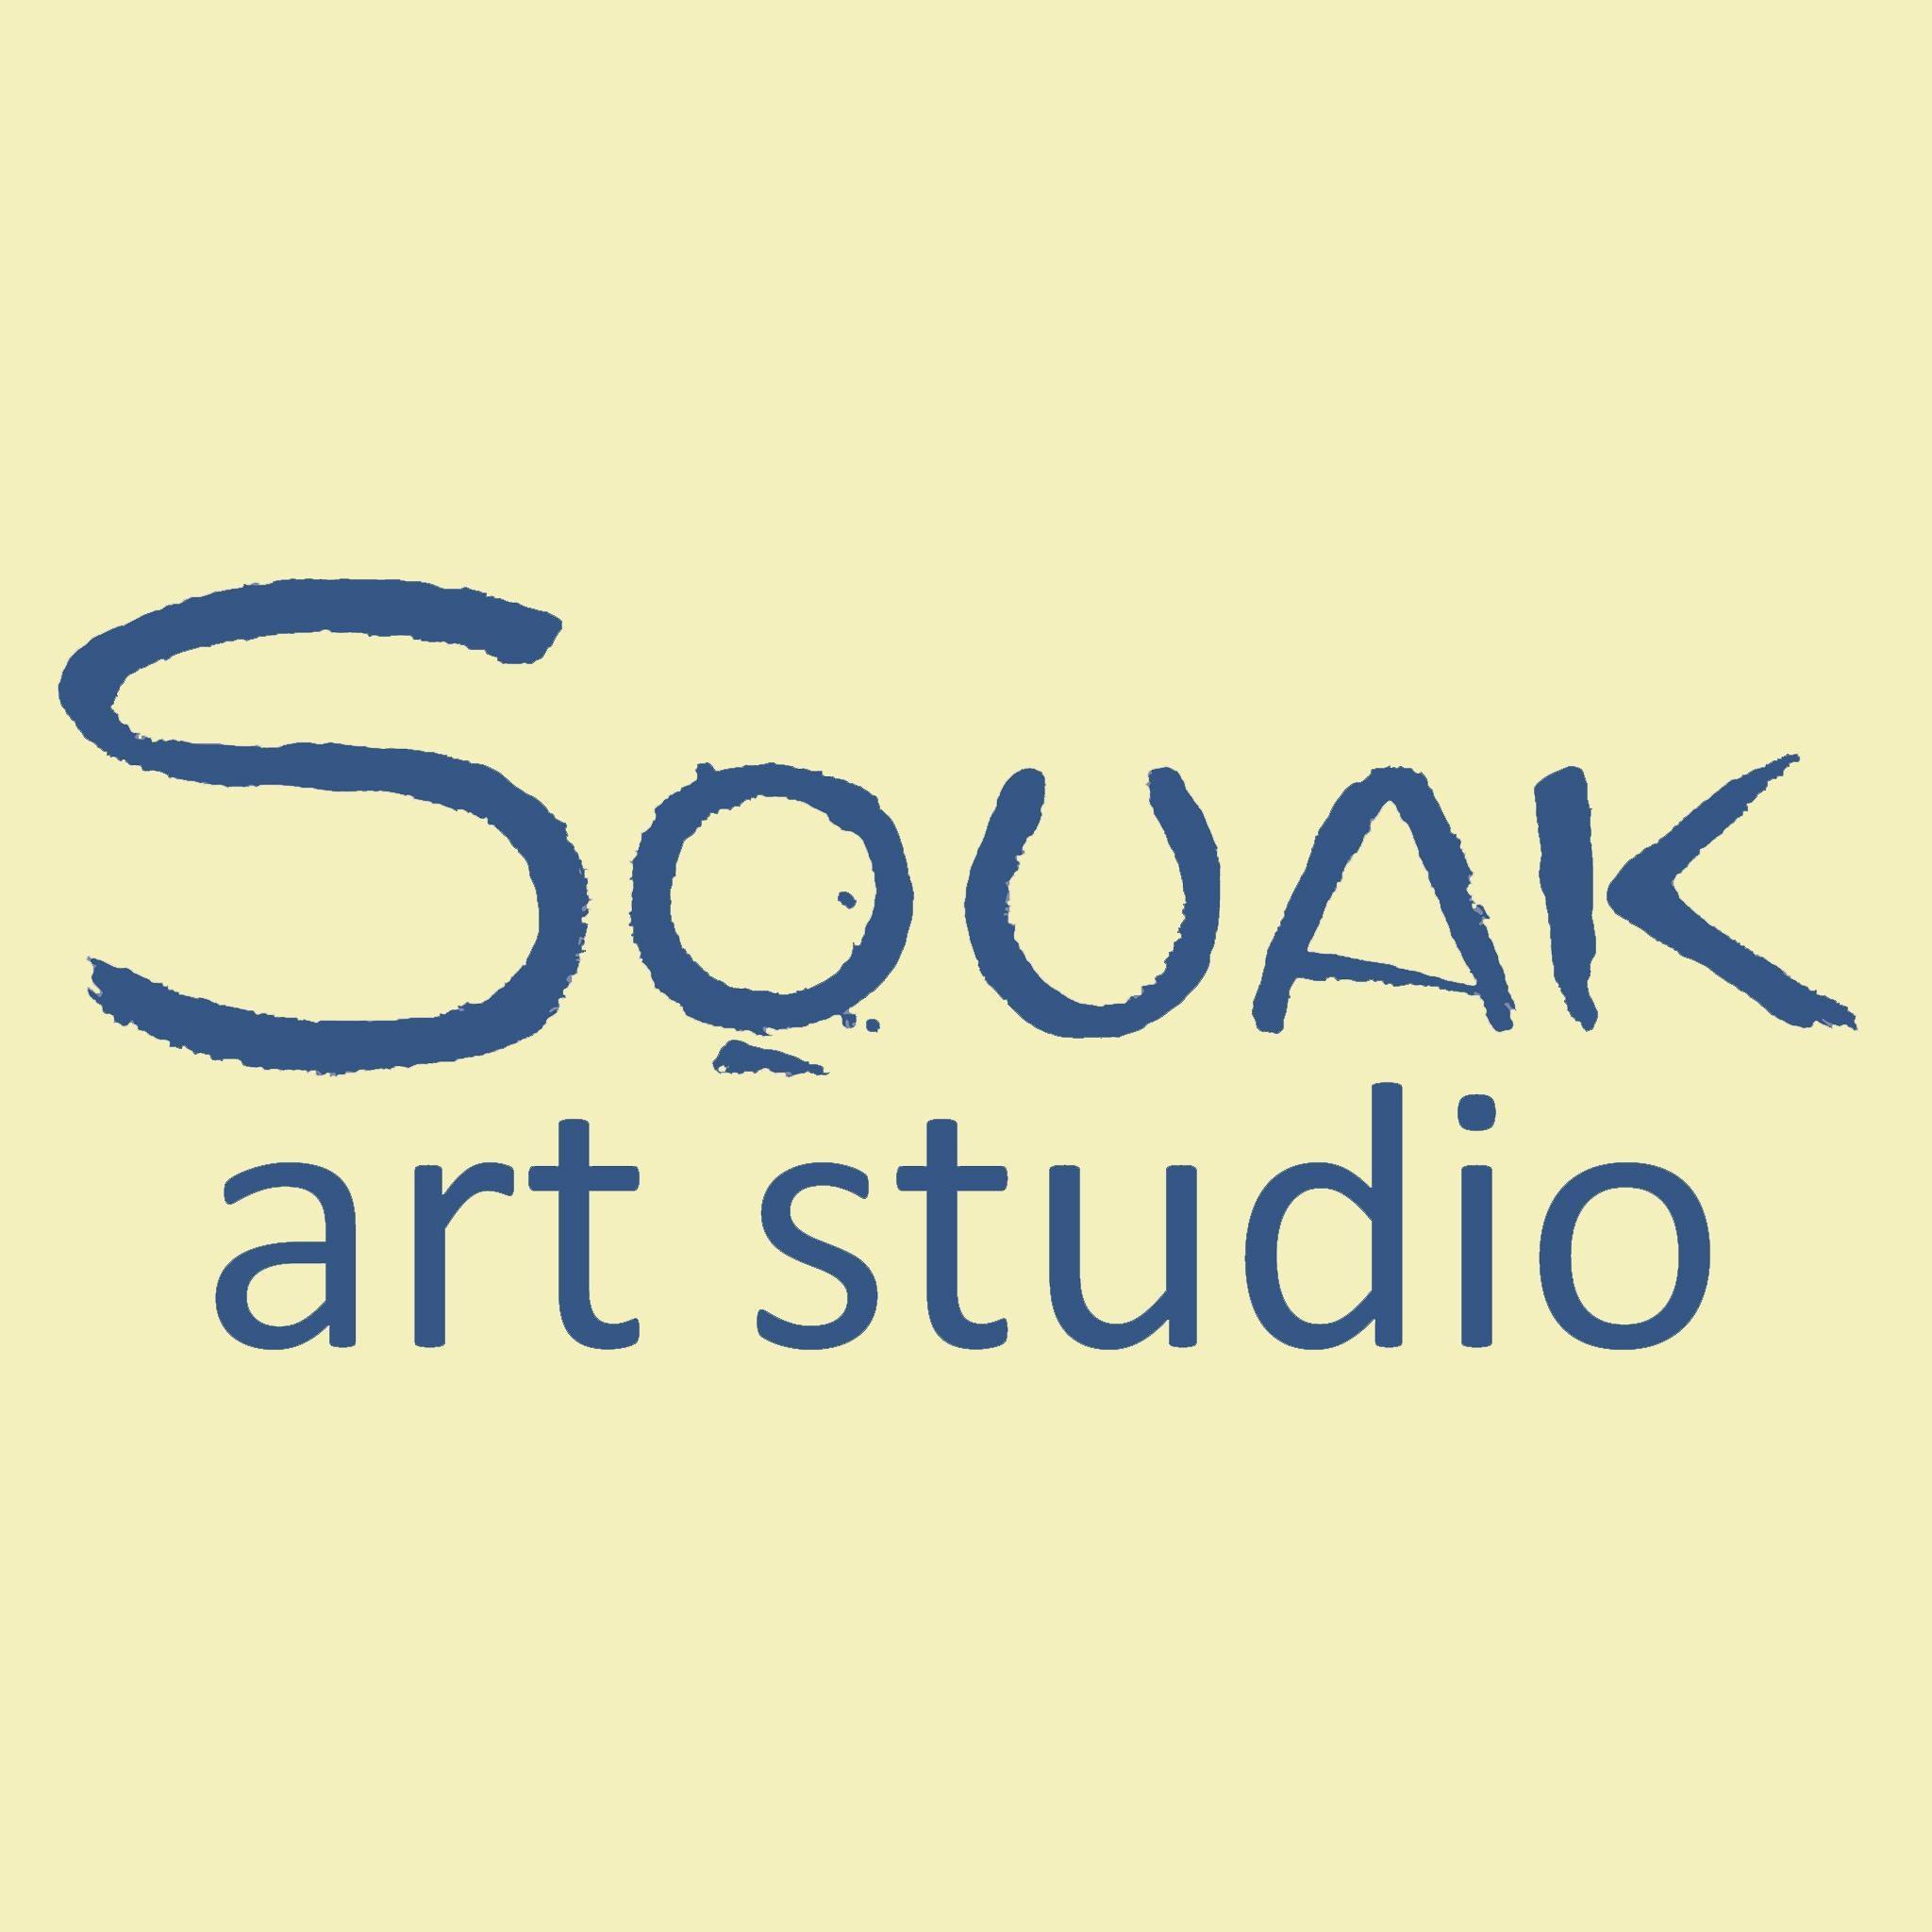 Business logo of Squak Art Studio